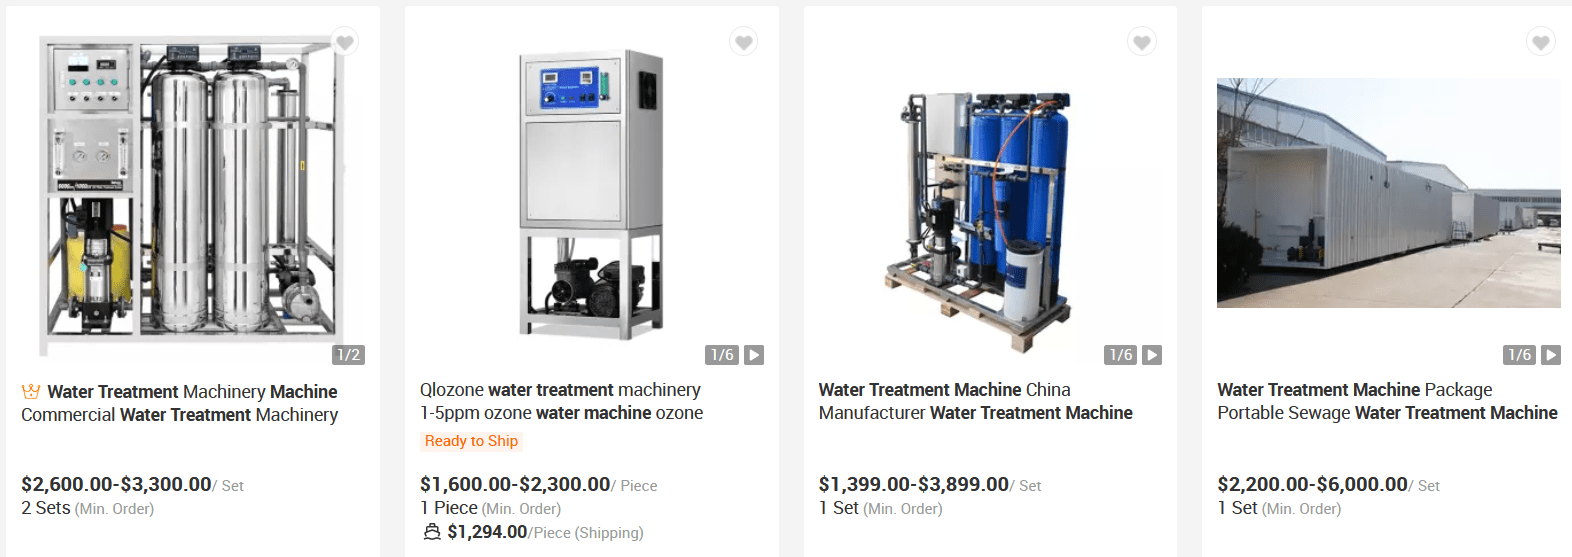 Water Treatment Machine Prices - source Amazon.com - Alkaline Water Treatment